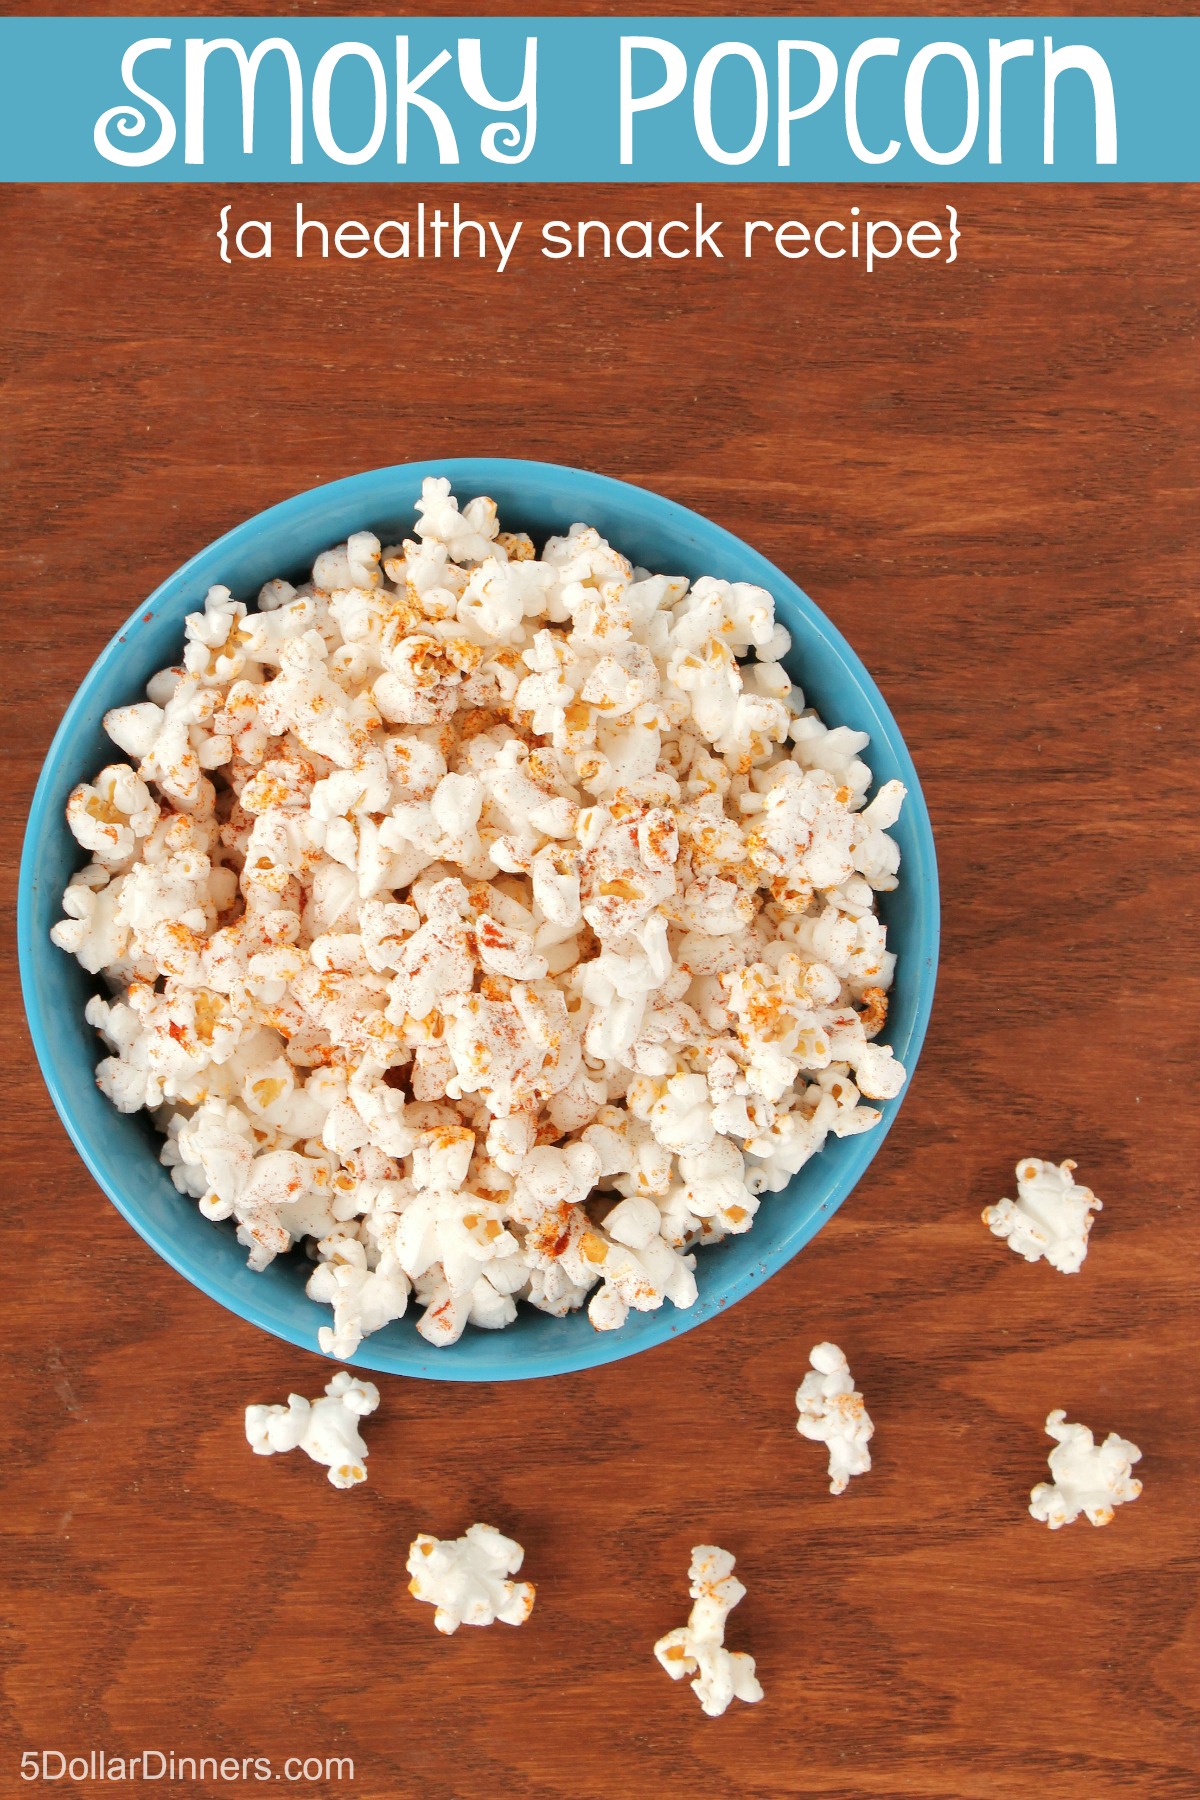 Smoky Popcorn - $5 Dinners | Budget Recipes, Meal Plans, Freezer Meals